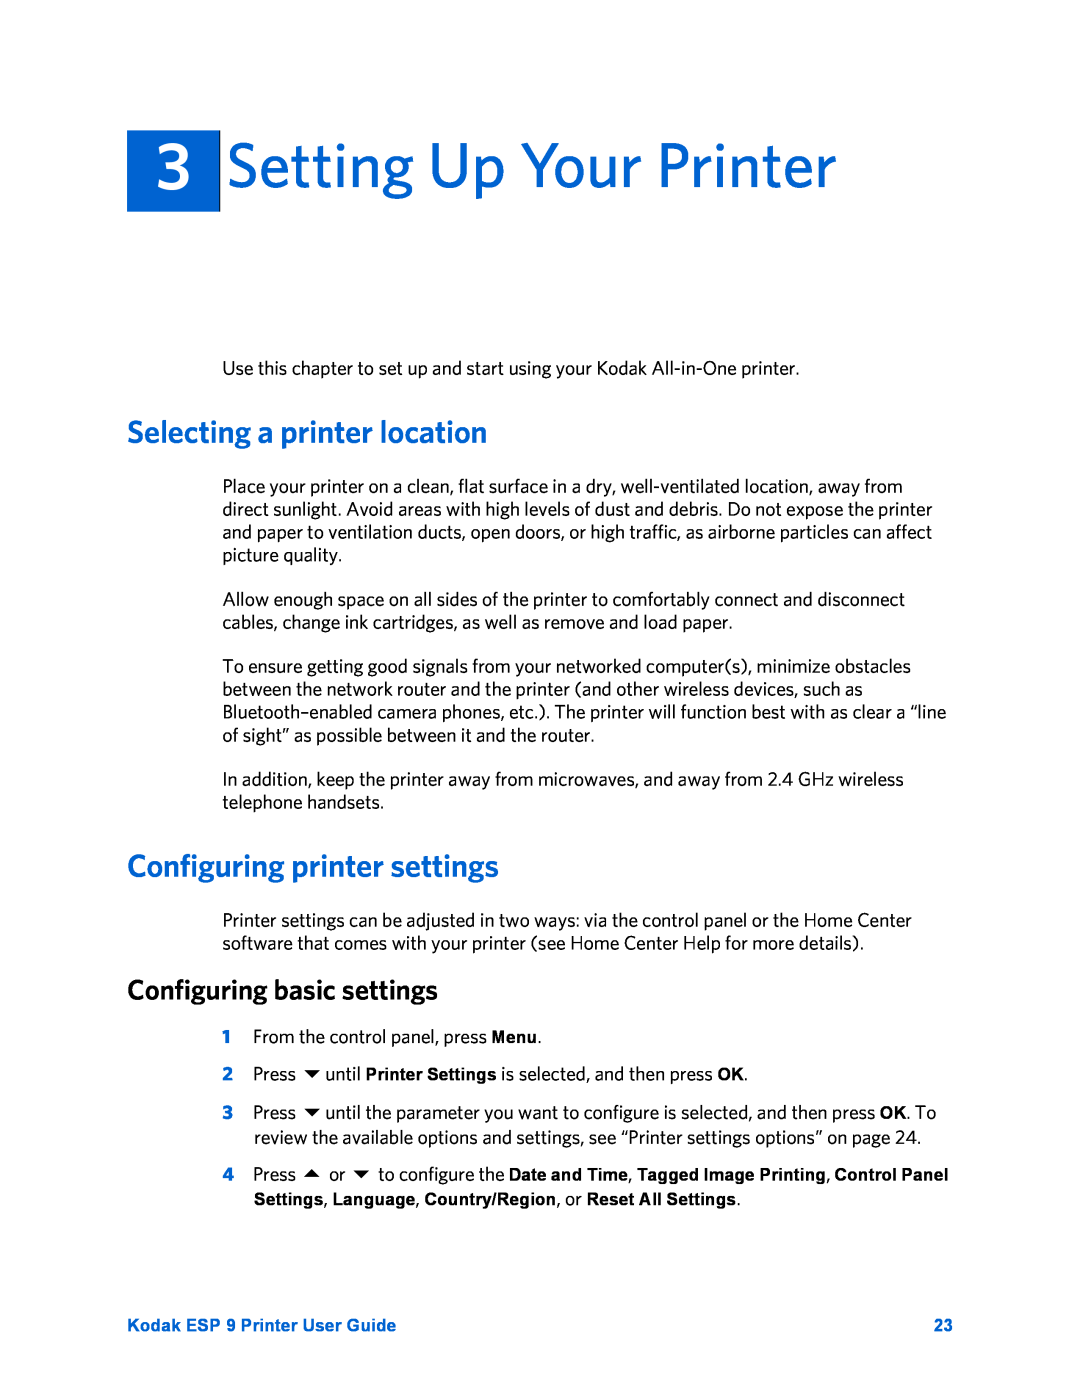 Kodak ESP 9 manual Setting Up Your Printer, Selecting a printer location, Configuring printer settings 